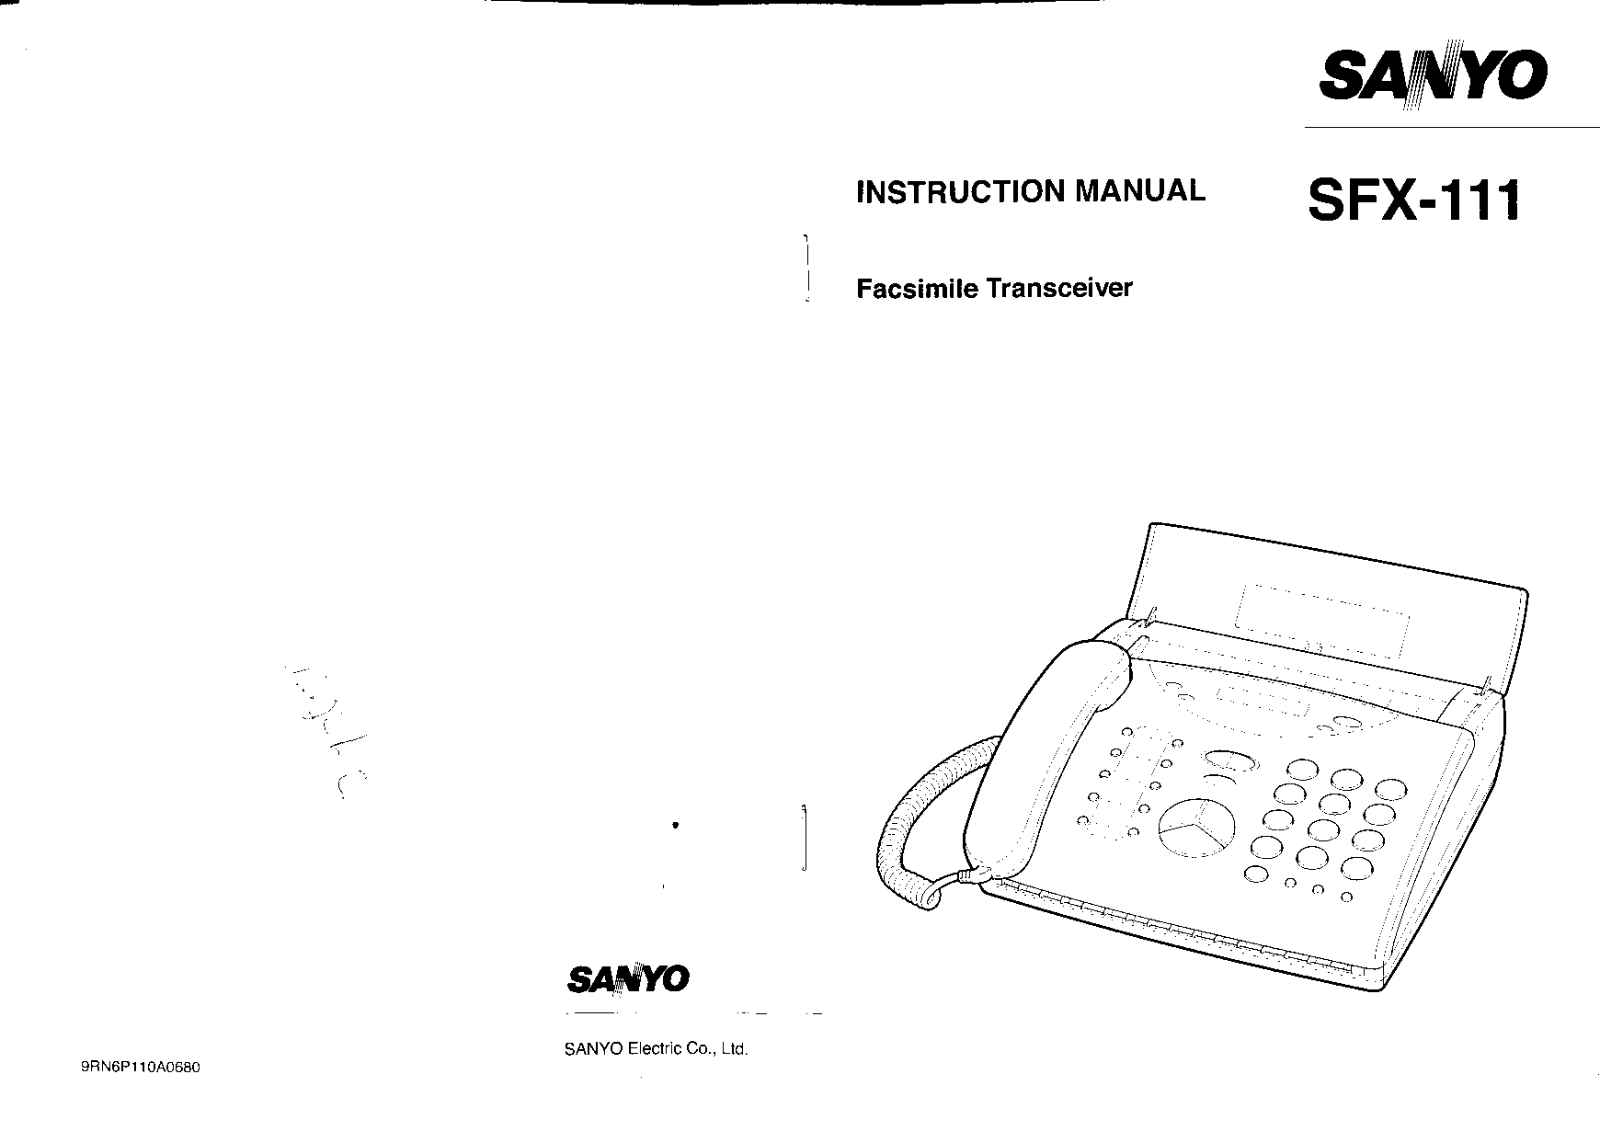 Sanyo SFX-111 Manual